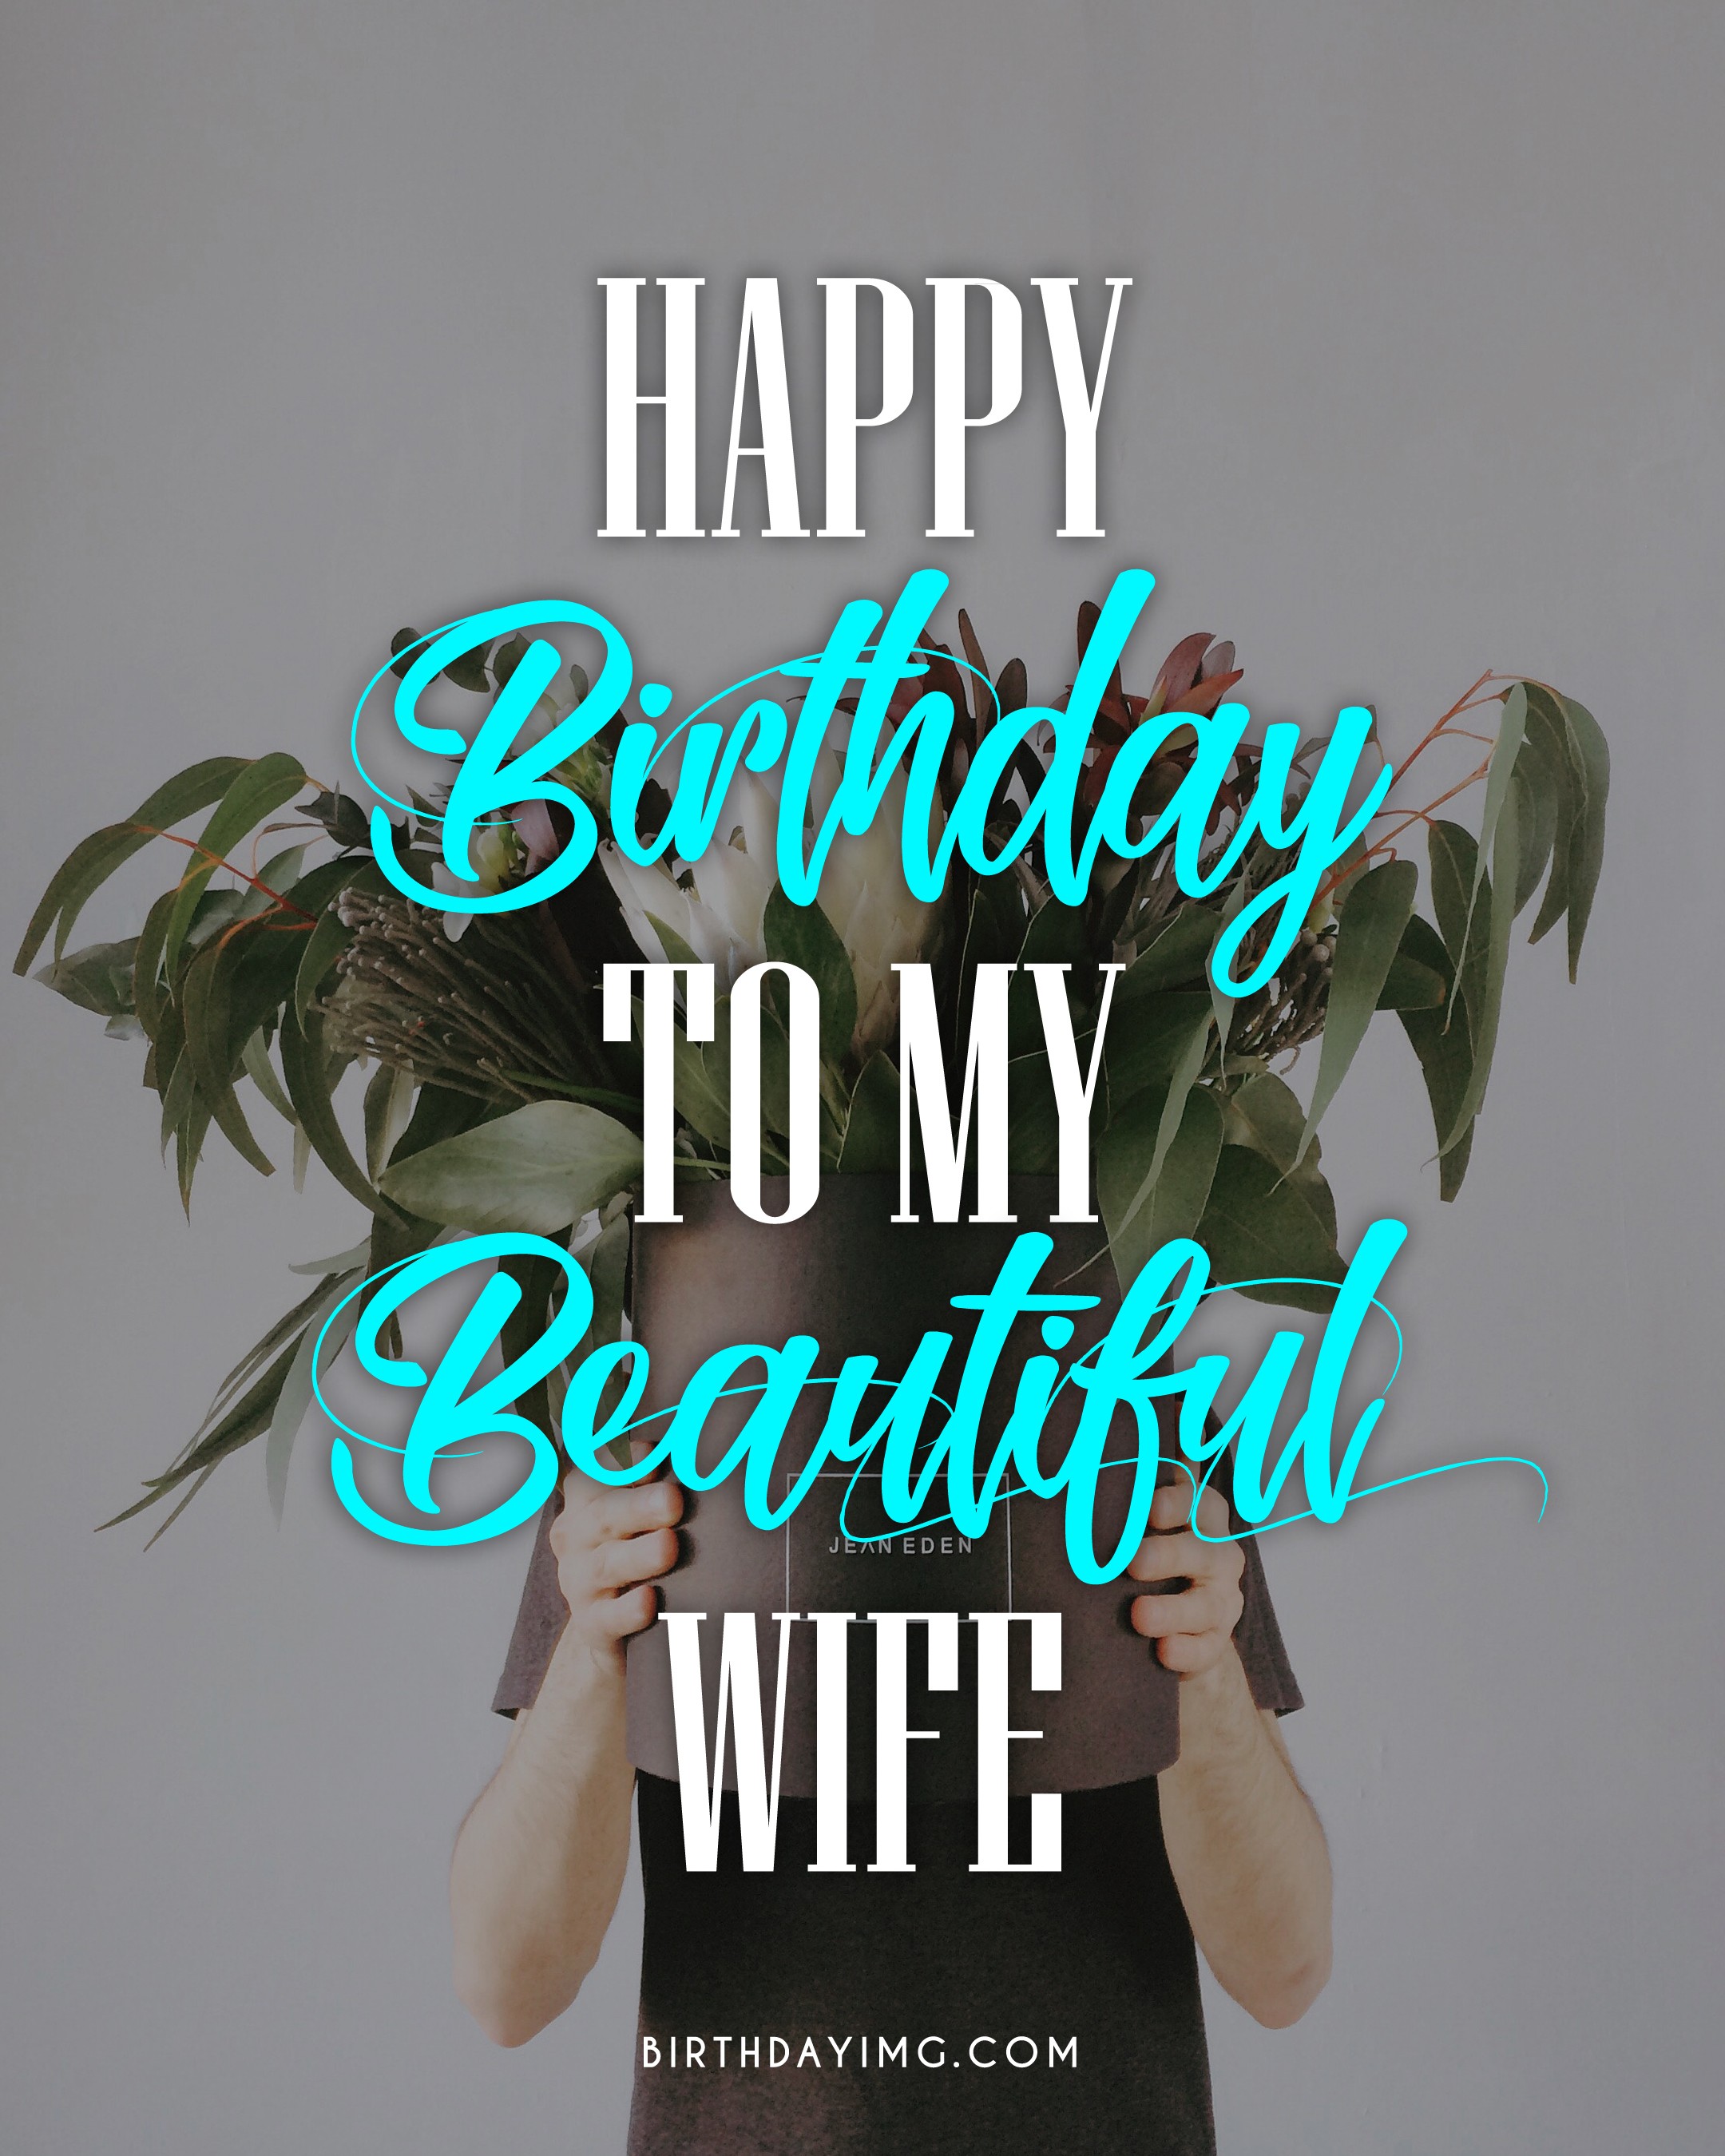 Free For Wife Happy Birthday Image - birthdayimg.com